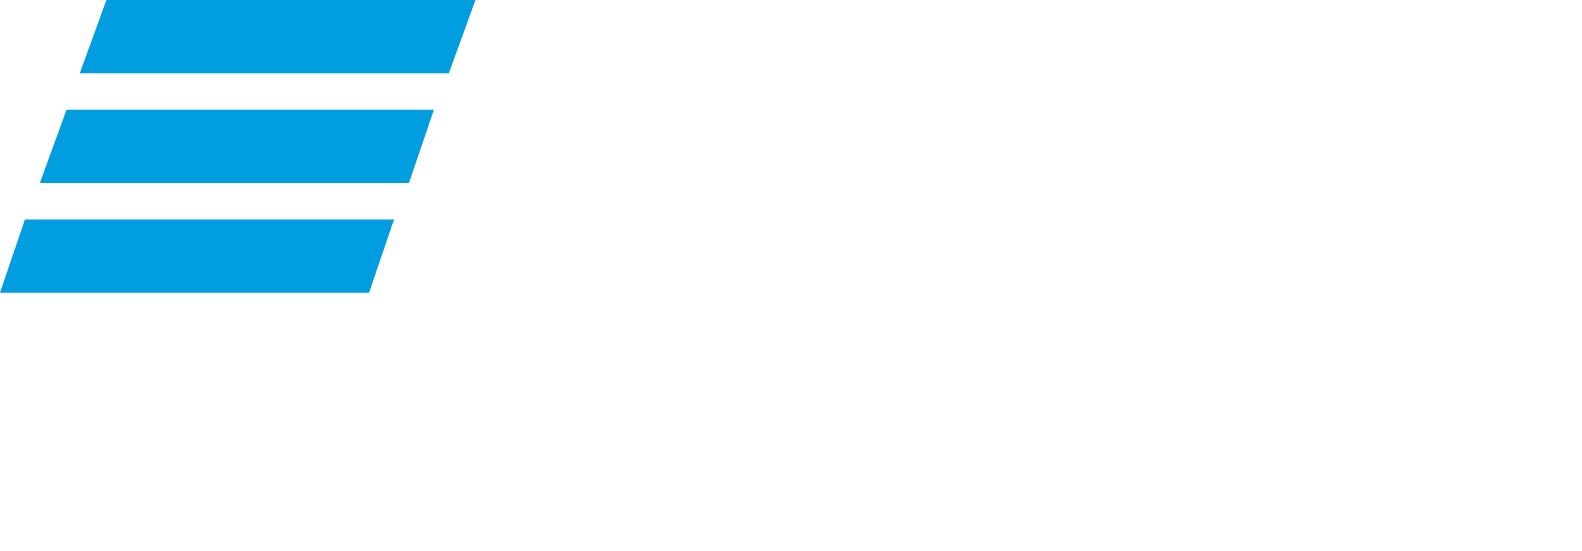 VTB Bank Logo groß für dunkle Hintergründe (transparentes PNG)